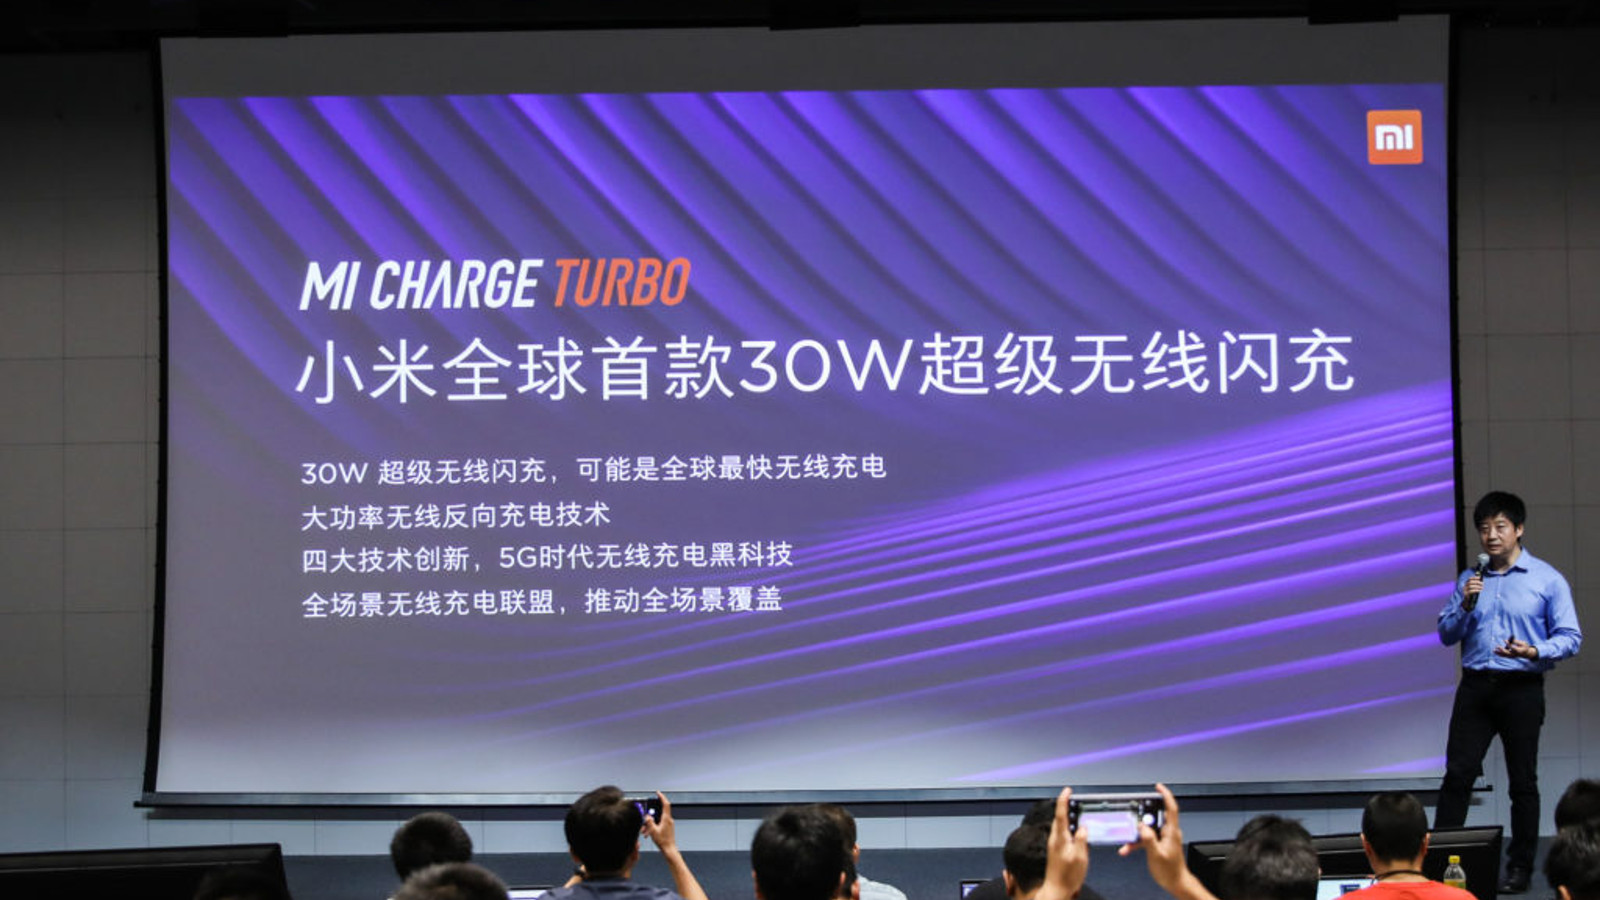 xiaomi mi charge turbo offers 30W wireless charging.